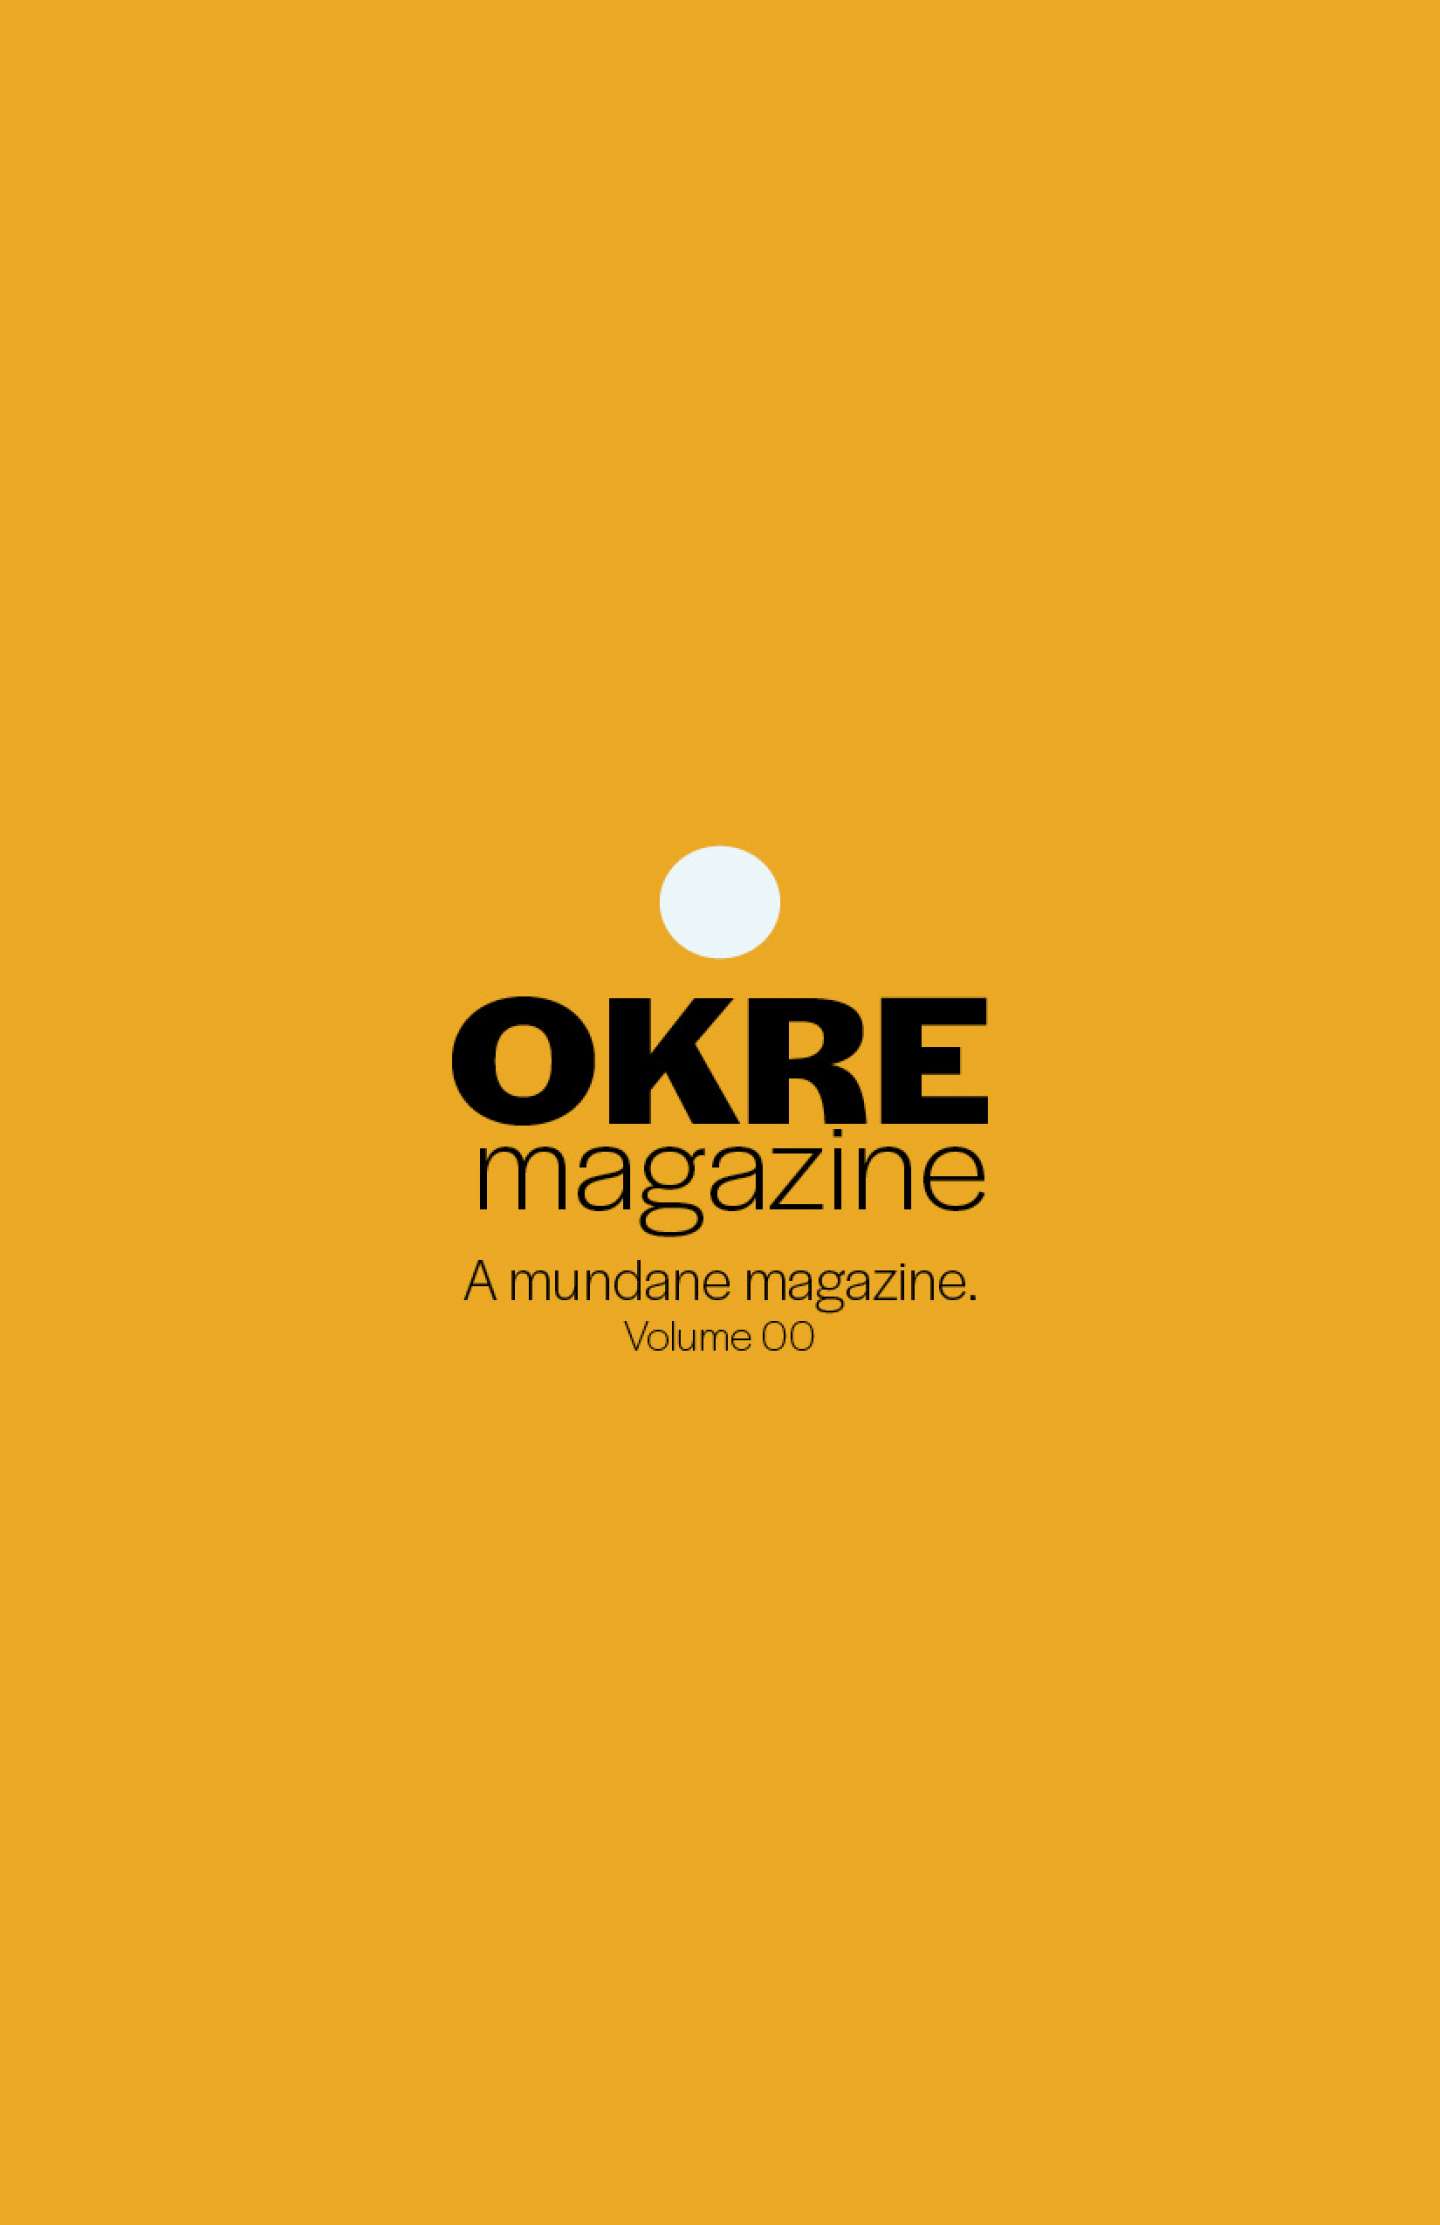 OKRE - A MUNDANE MAGAZINE